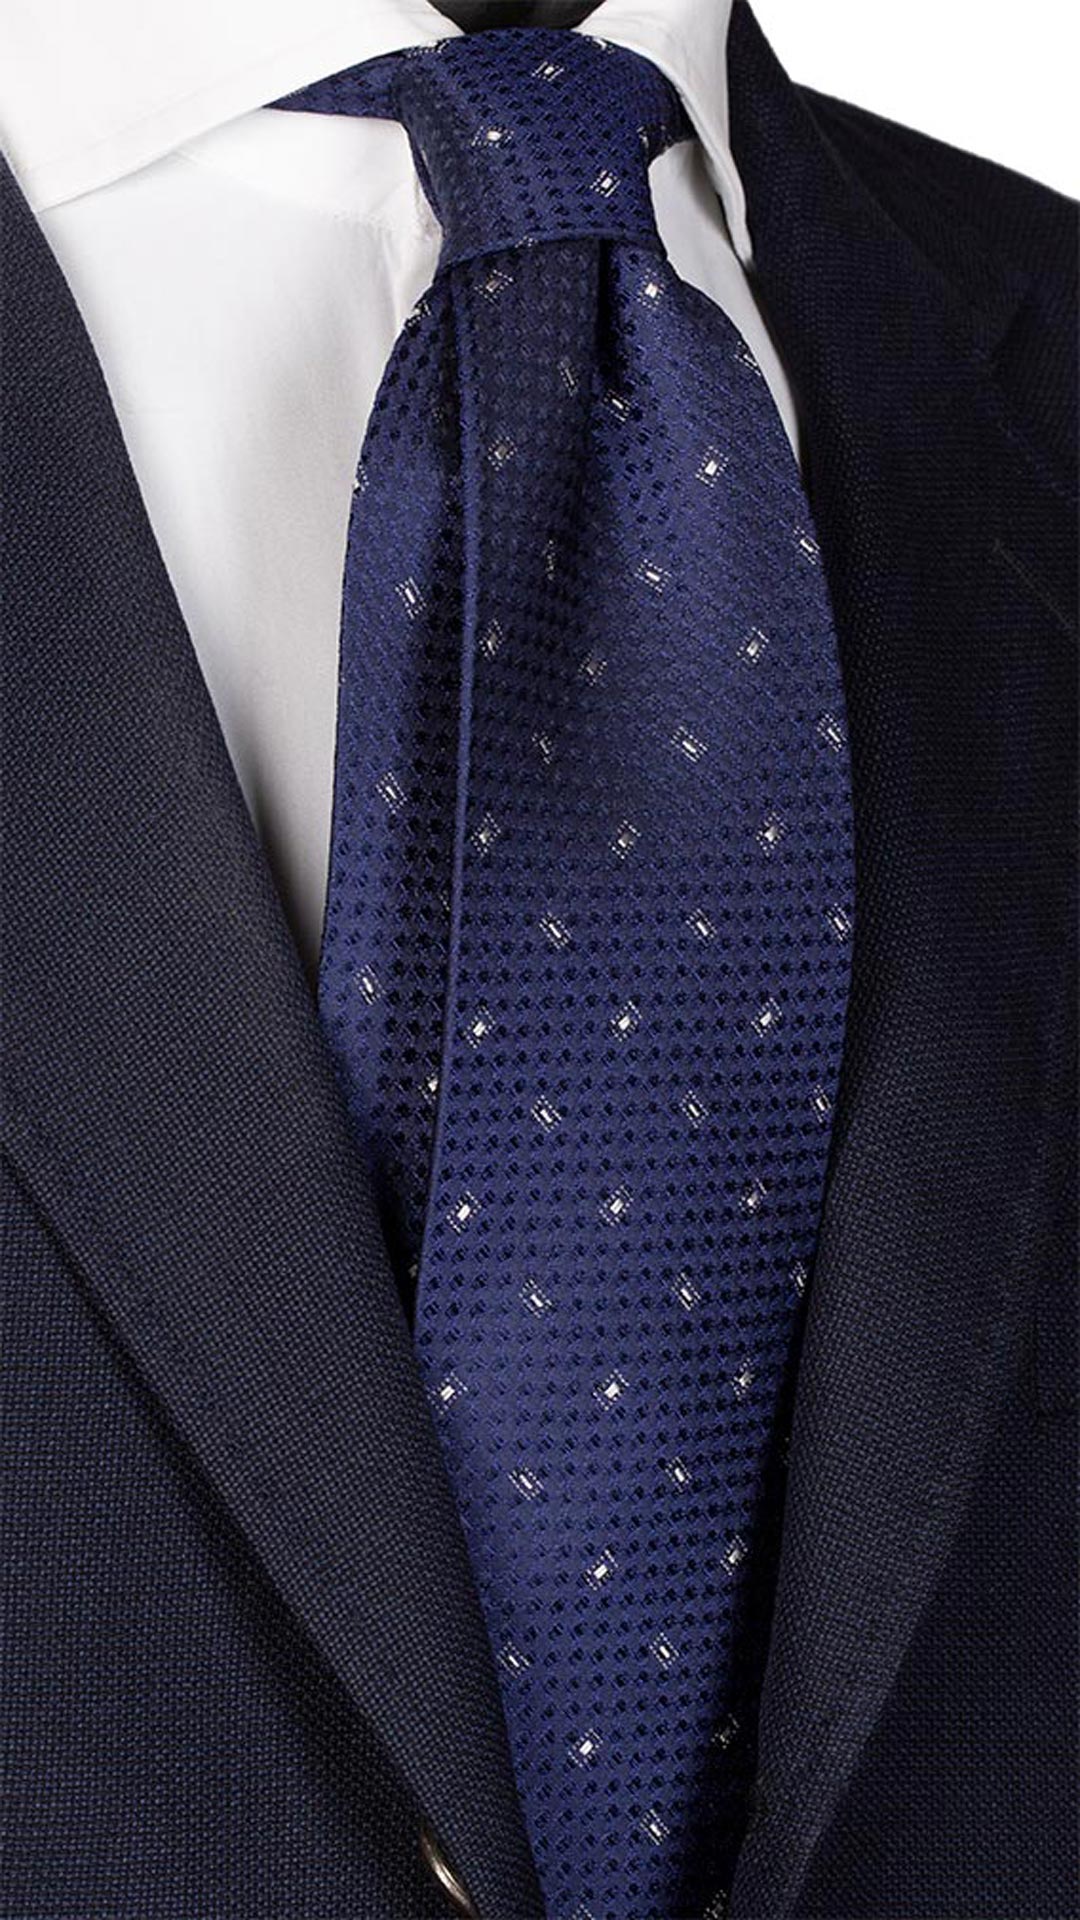 Cravatta da Cerimonia di Seta Bluette Fantasia Bianca Cangiante CY2543 Made in Italy Graffeo Cravatte